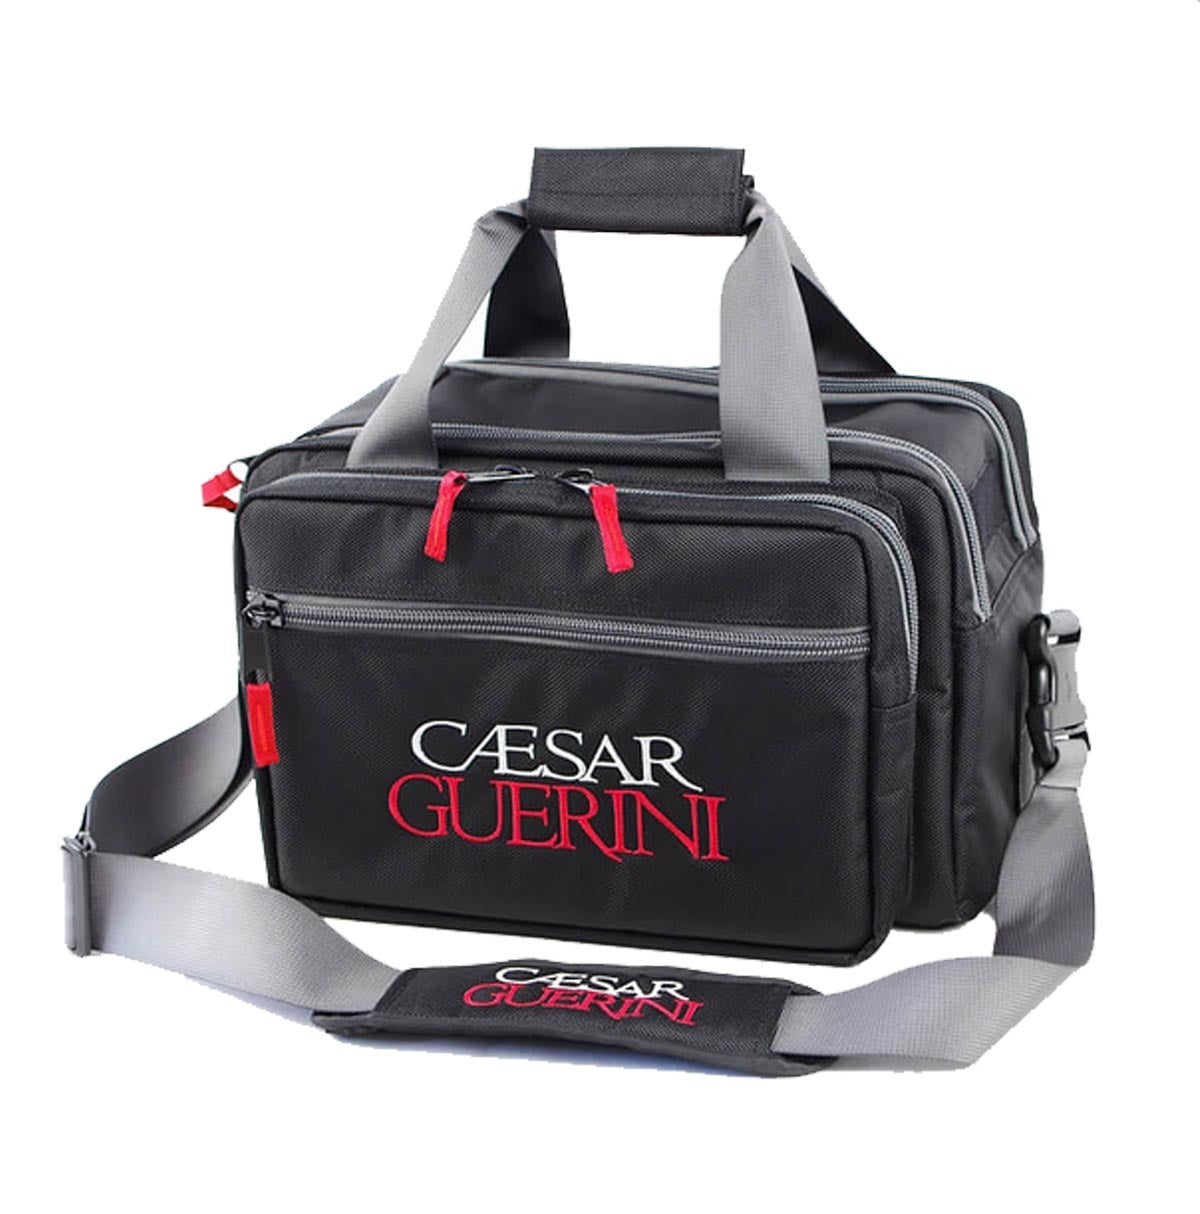 Caesar Guerini Range Bag